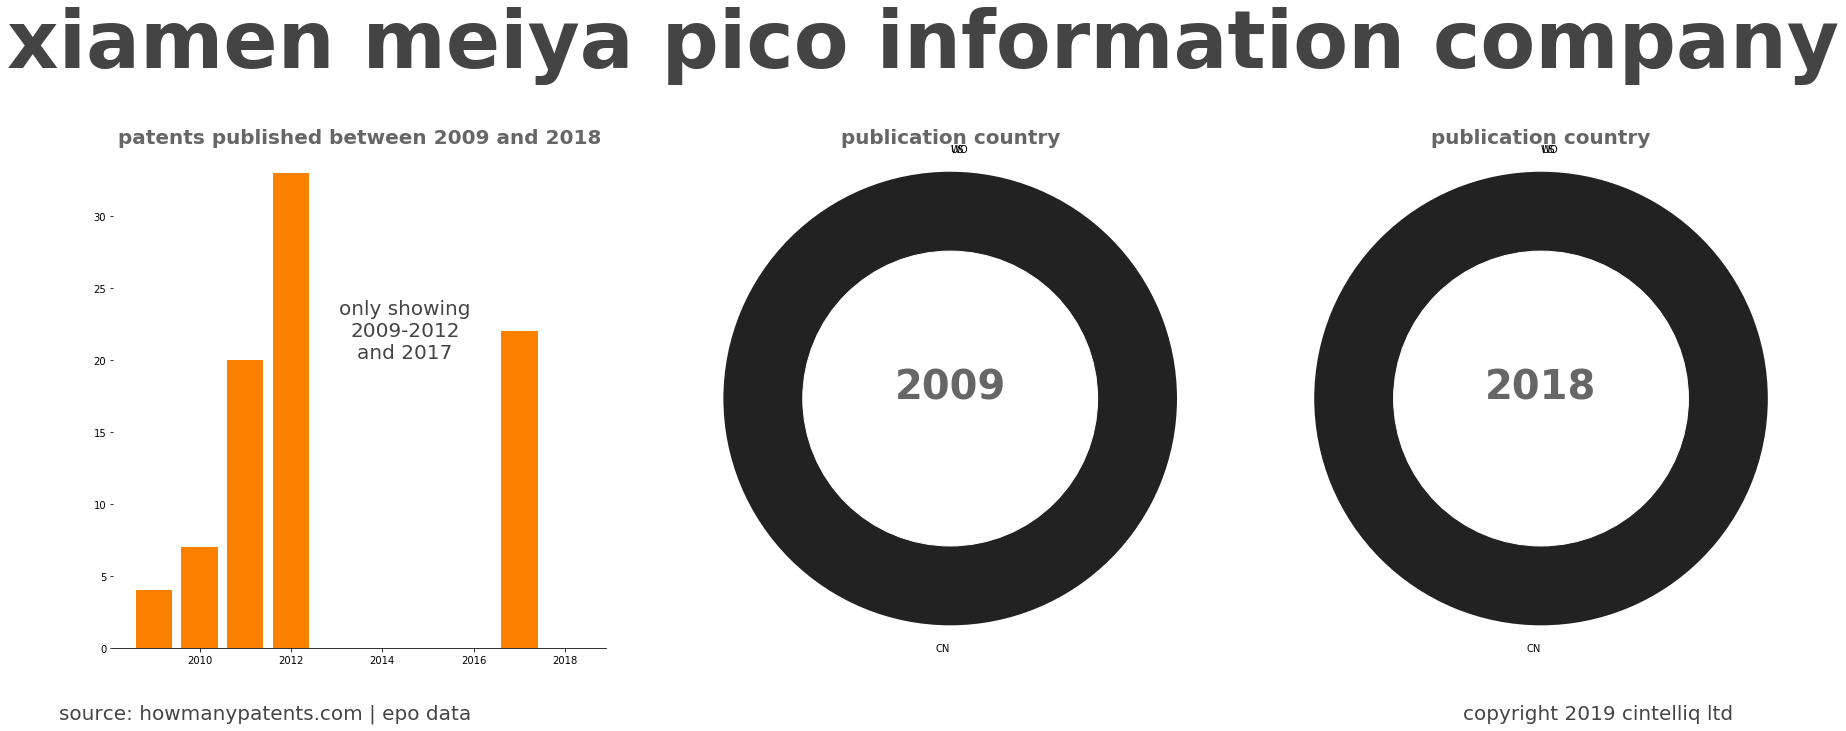 summary of patents for Xiamen Meiya Pico Information Company